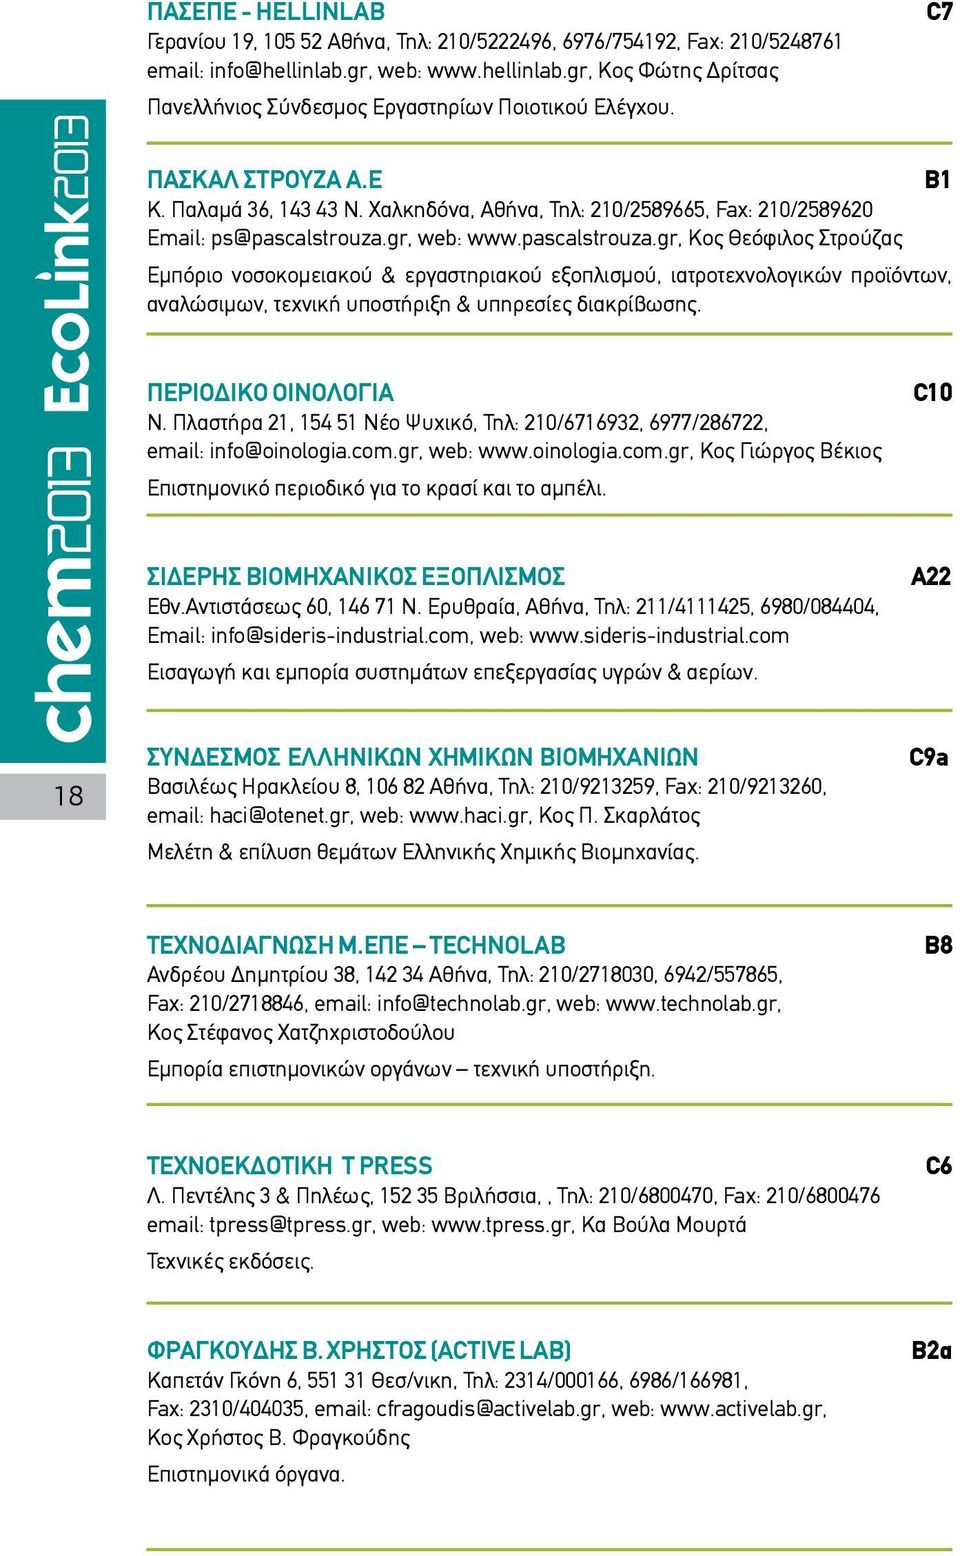 gr, web: www.pascalstrouza.gr, Κος Θεόφιλος Στρούζας Εμπόριο νοσοκομειακού & εργαστηριακού εξοπλισμού, ιατροτεχνολογικών προϊόντων, αναλώσιμων, τεχνική υποστήριξη & υπηρεσίες διακρίβωσης.